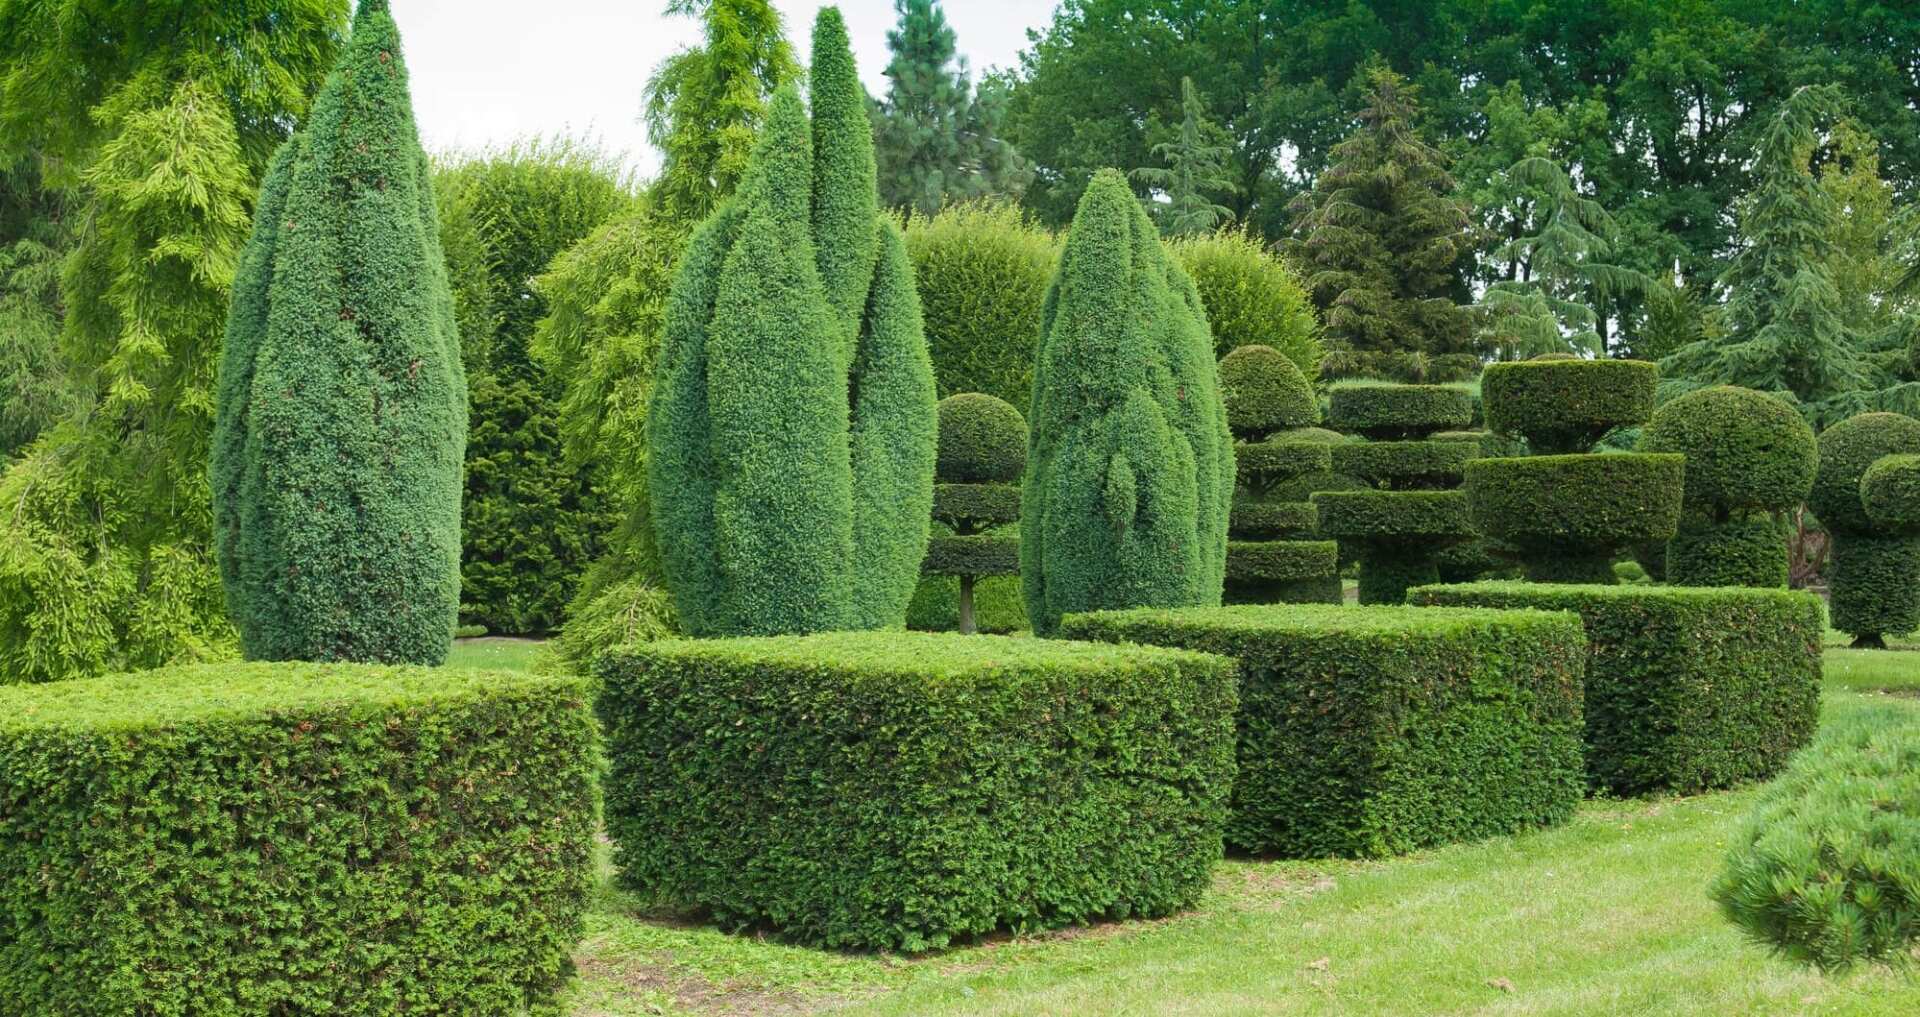 10 Inspiring Topiary Tree Gardens